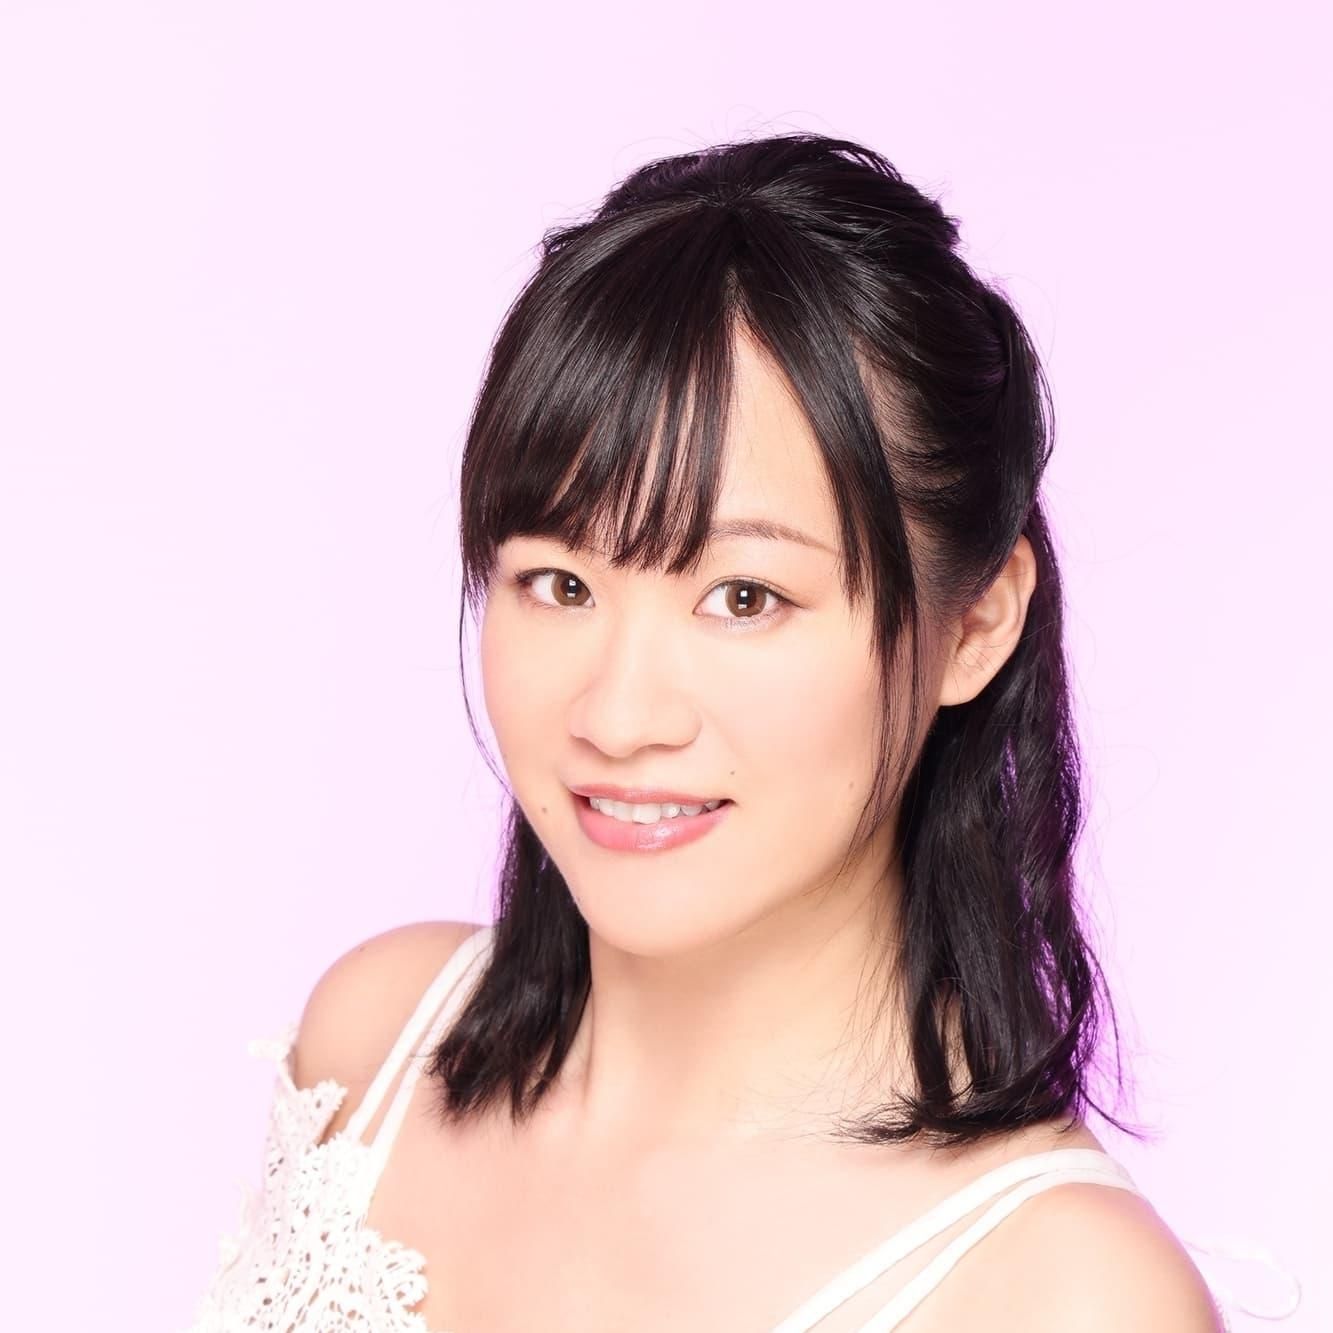 Miss Kuroitsu from the Monster Development Department (Manga) - TV